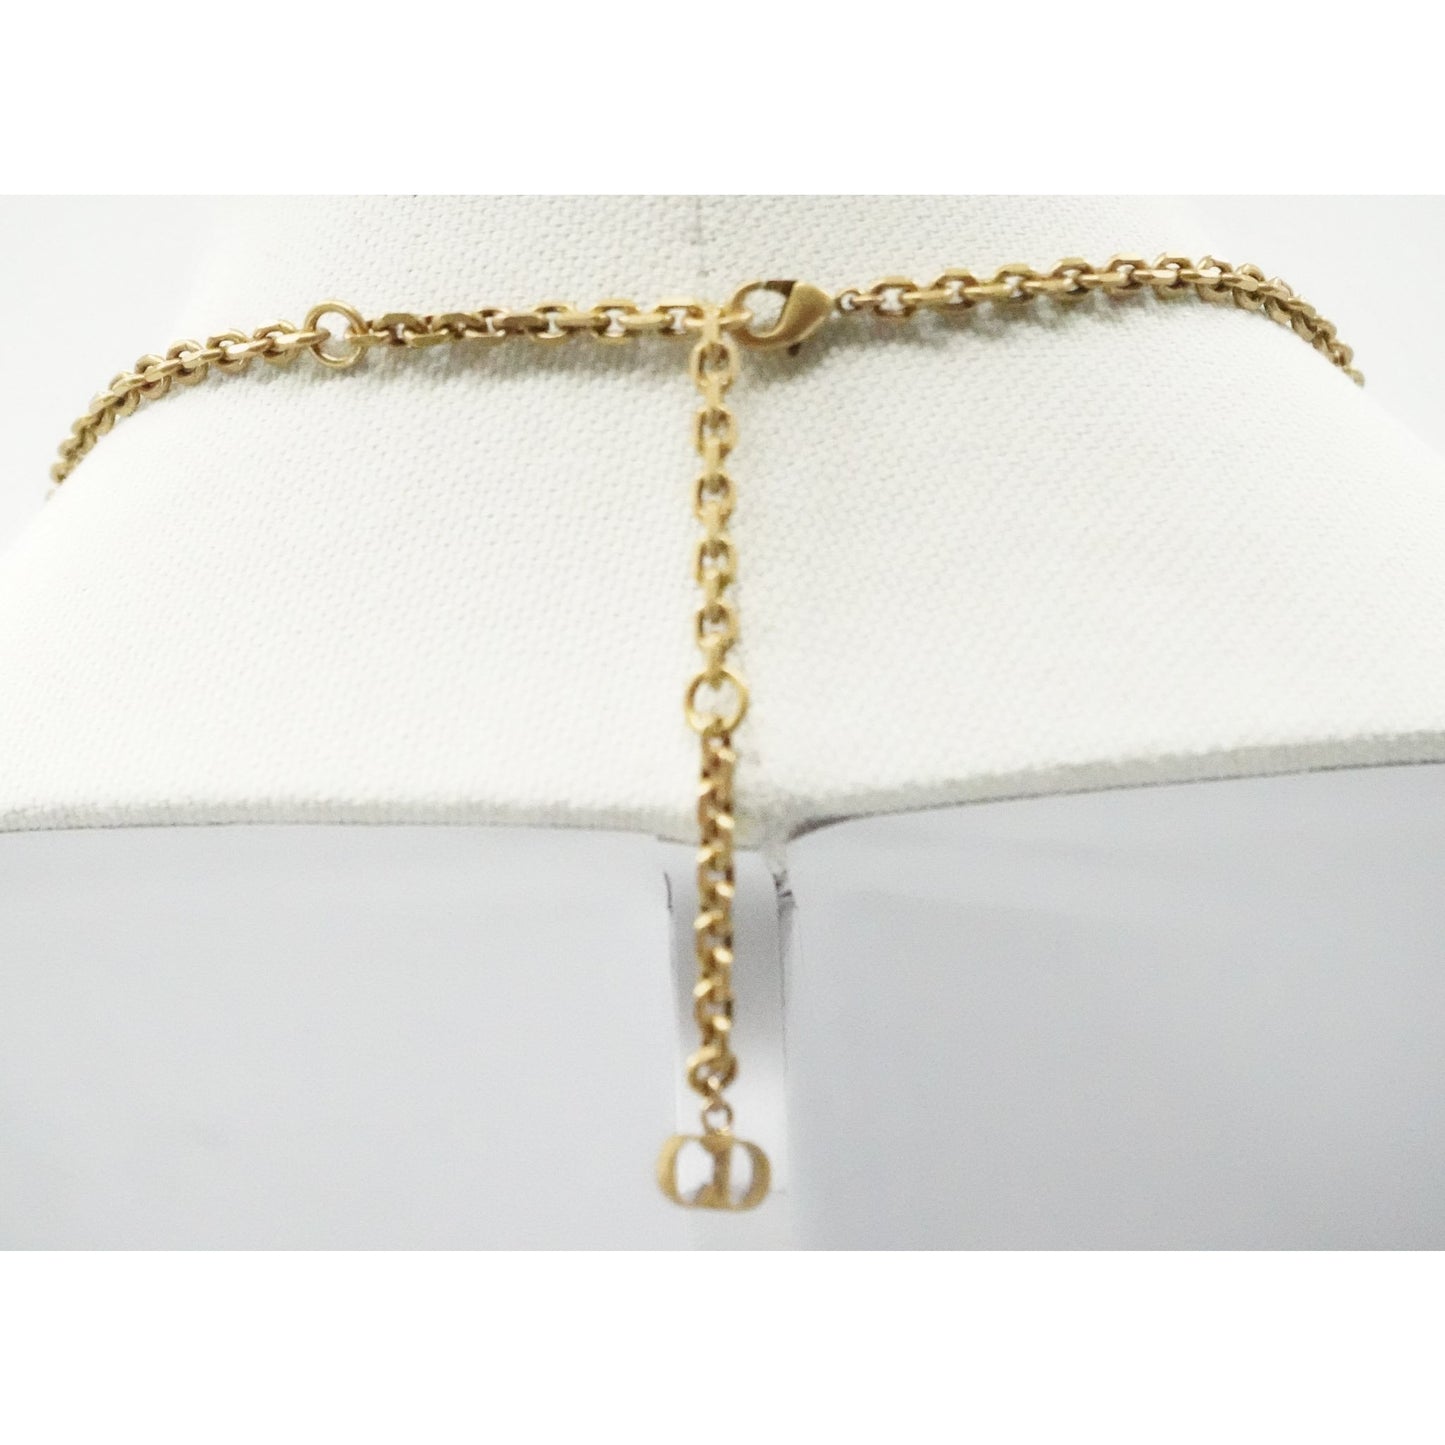 Christian Dior Dog-tag Necklace